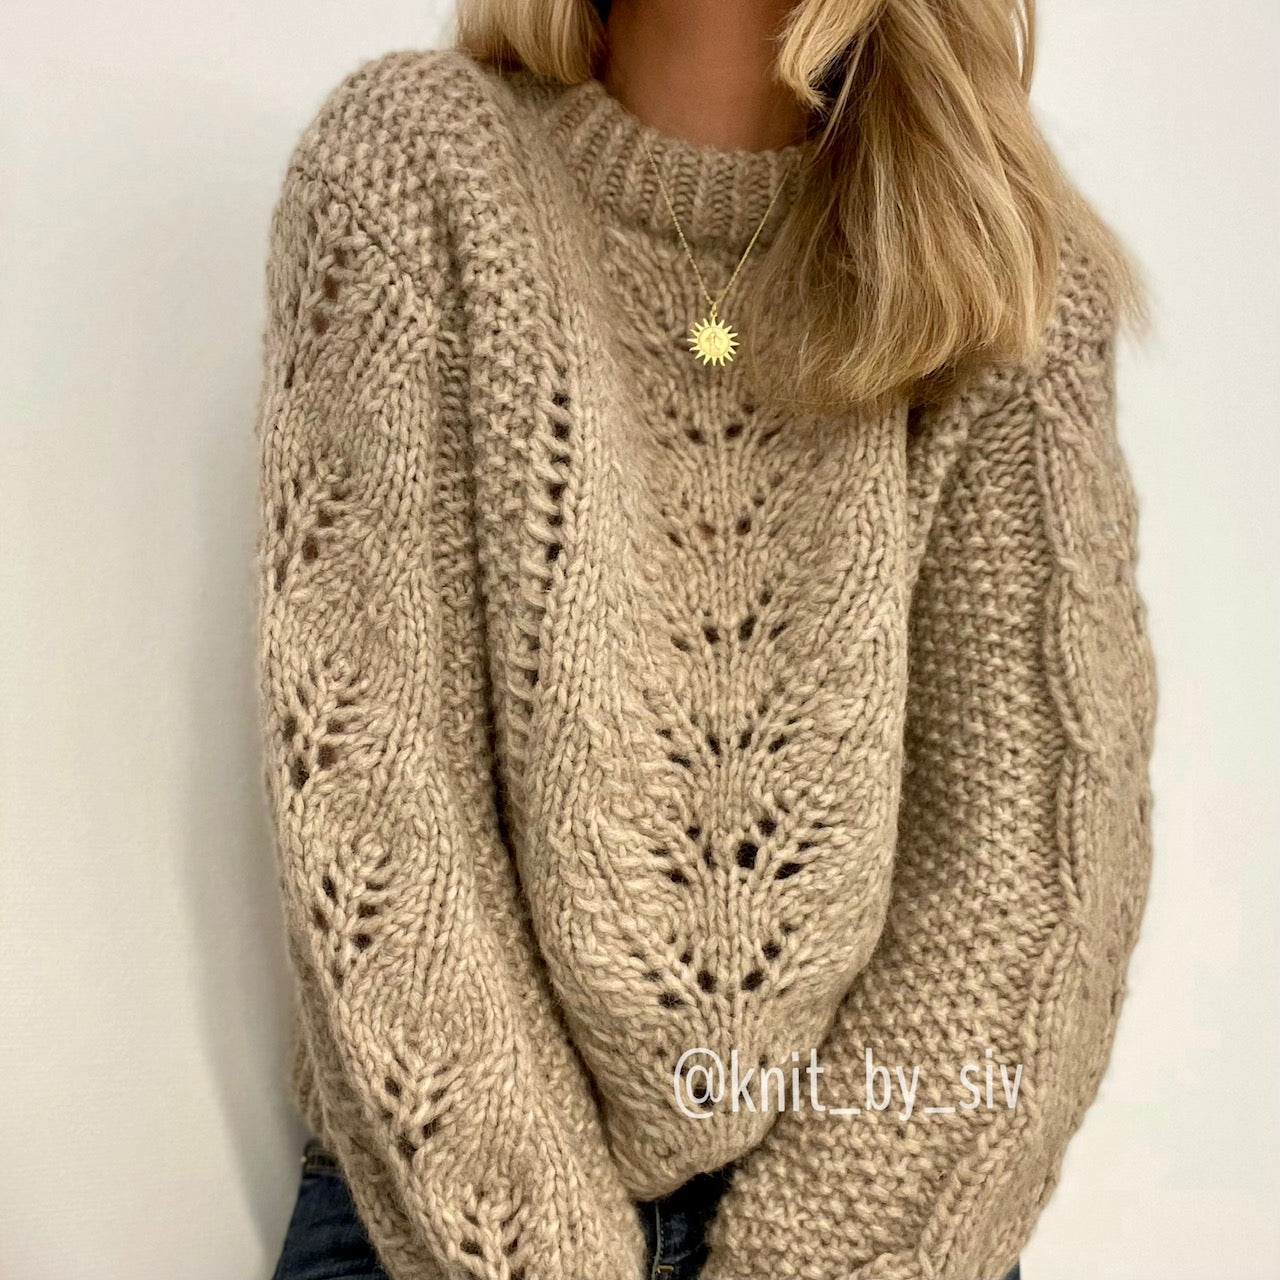 Elisabeth sweater in Drops Wish